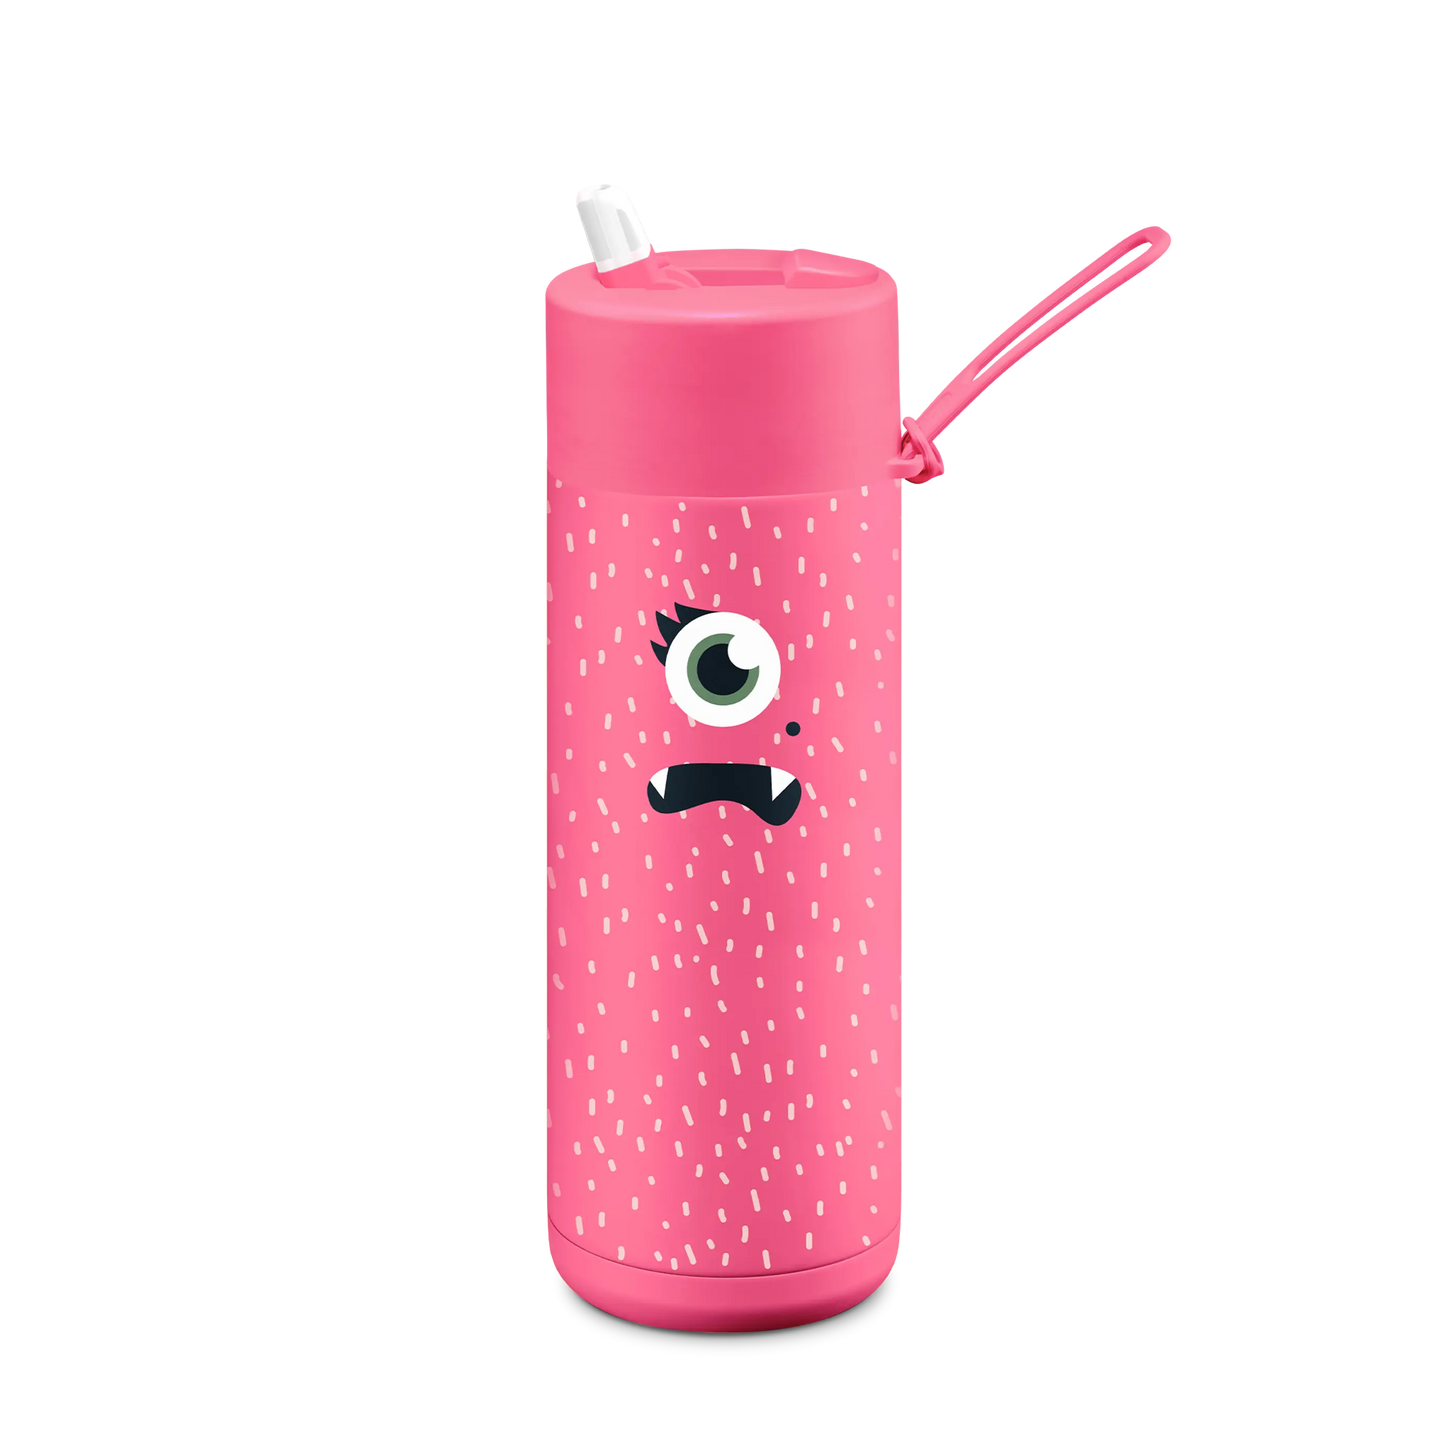 Frank Green Reausable Bottle 595ml | Piper Neon Pink (flip Lid)